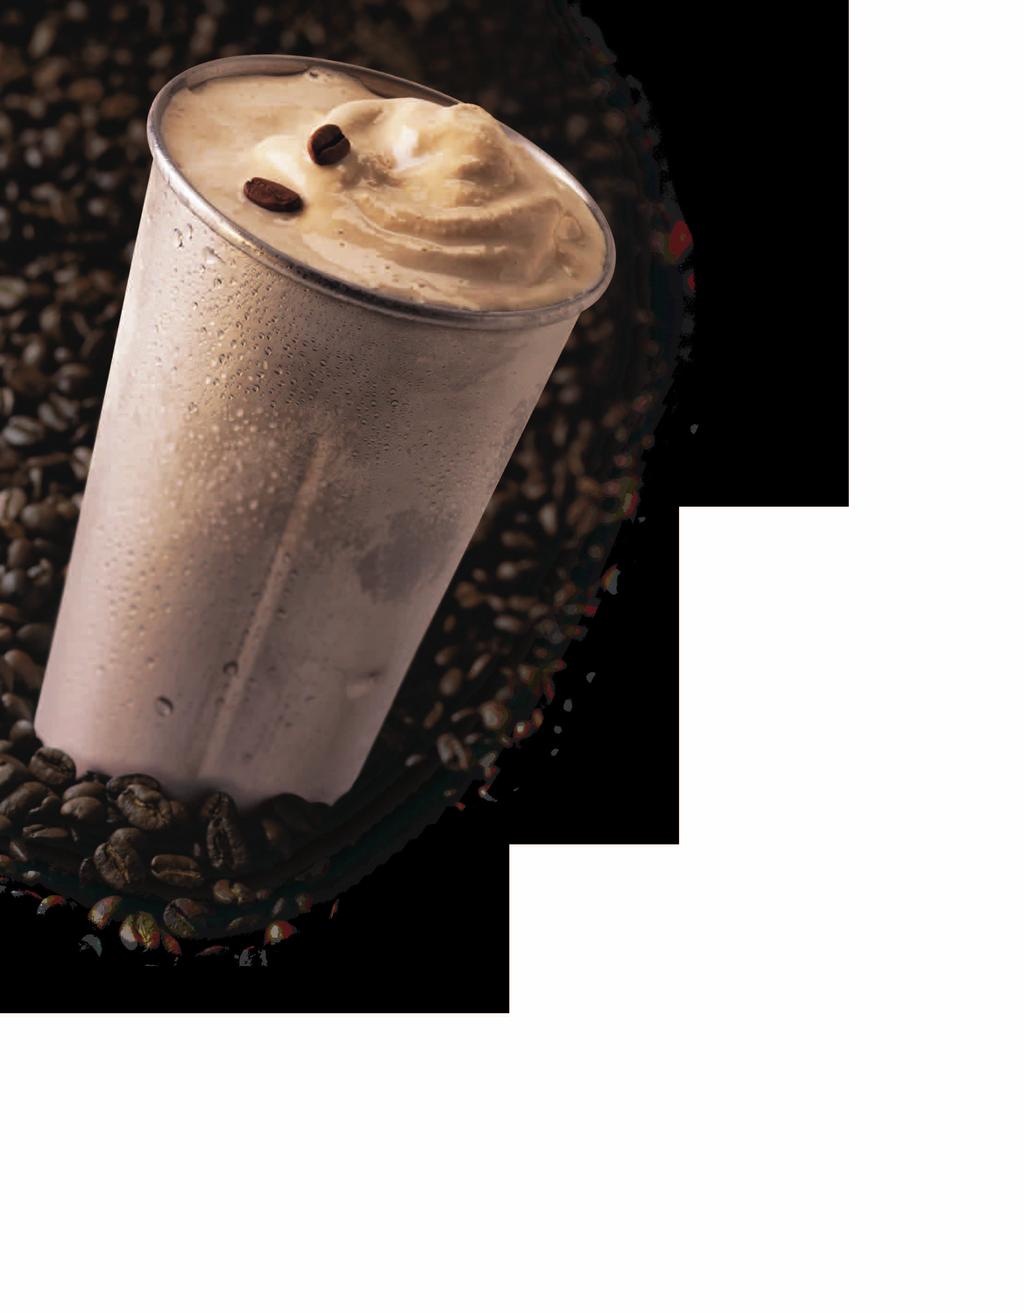 POWDER COFFEE CREATOR SINCE 1984 프라페 아이스 파우더 여름철에 얼음을 갈아 넣어 시원하게 즐기는 프라푸치노의 베이스가 되는 파우더 제품입니다.